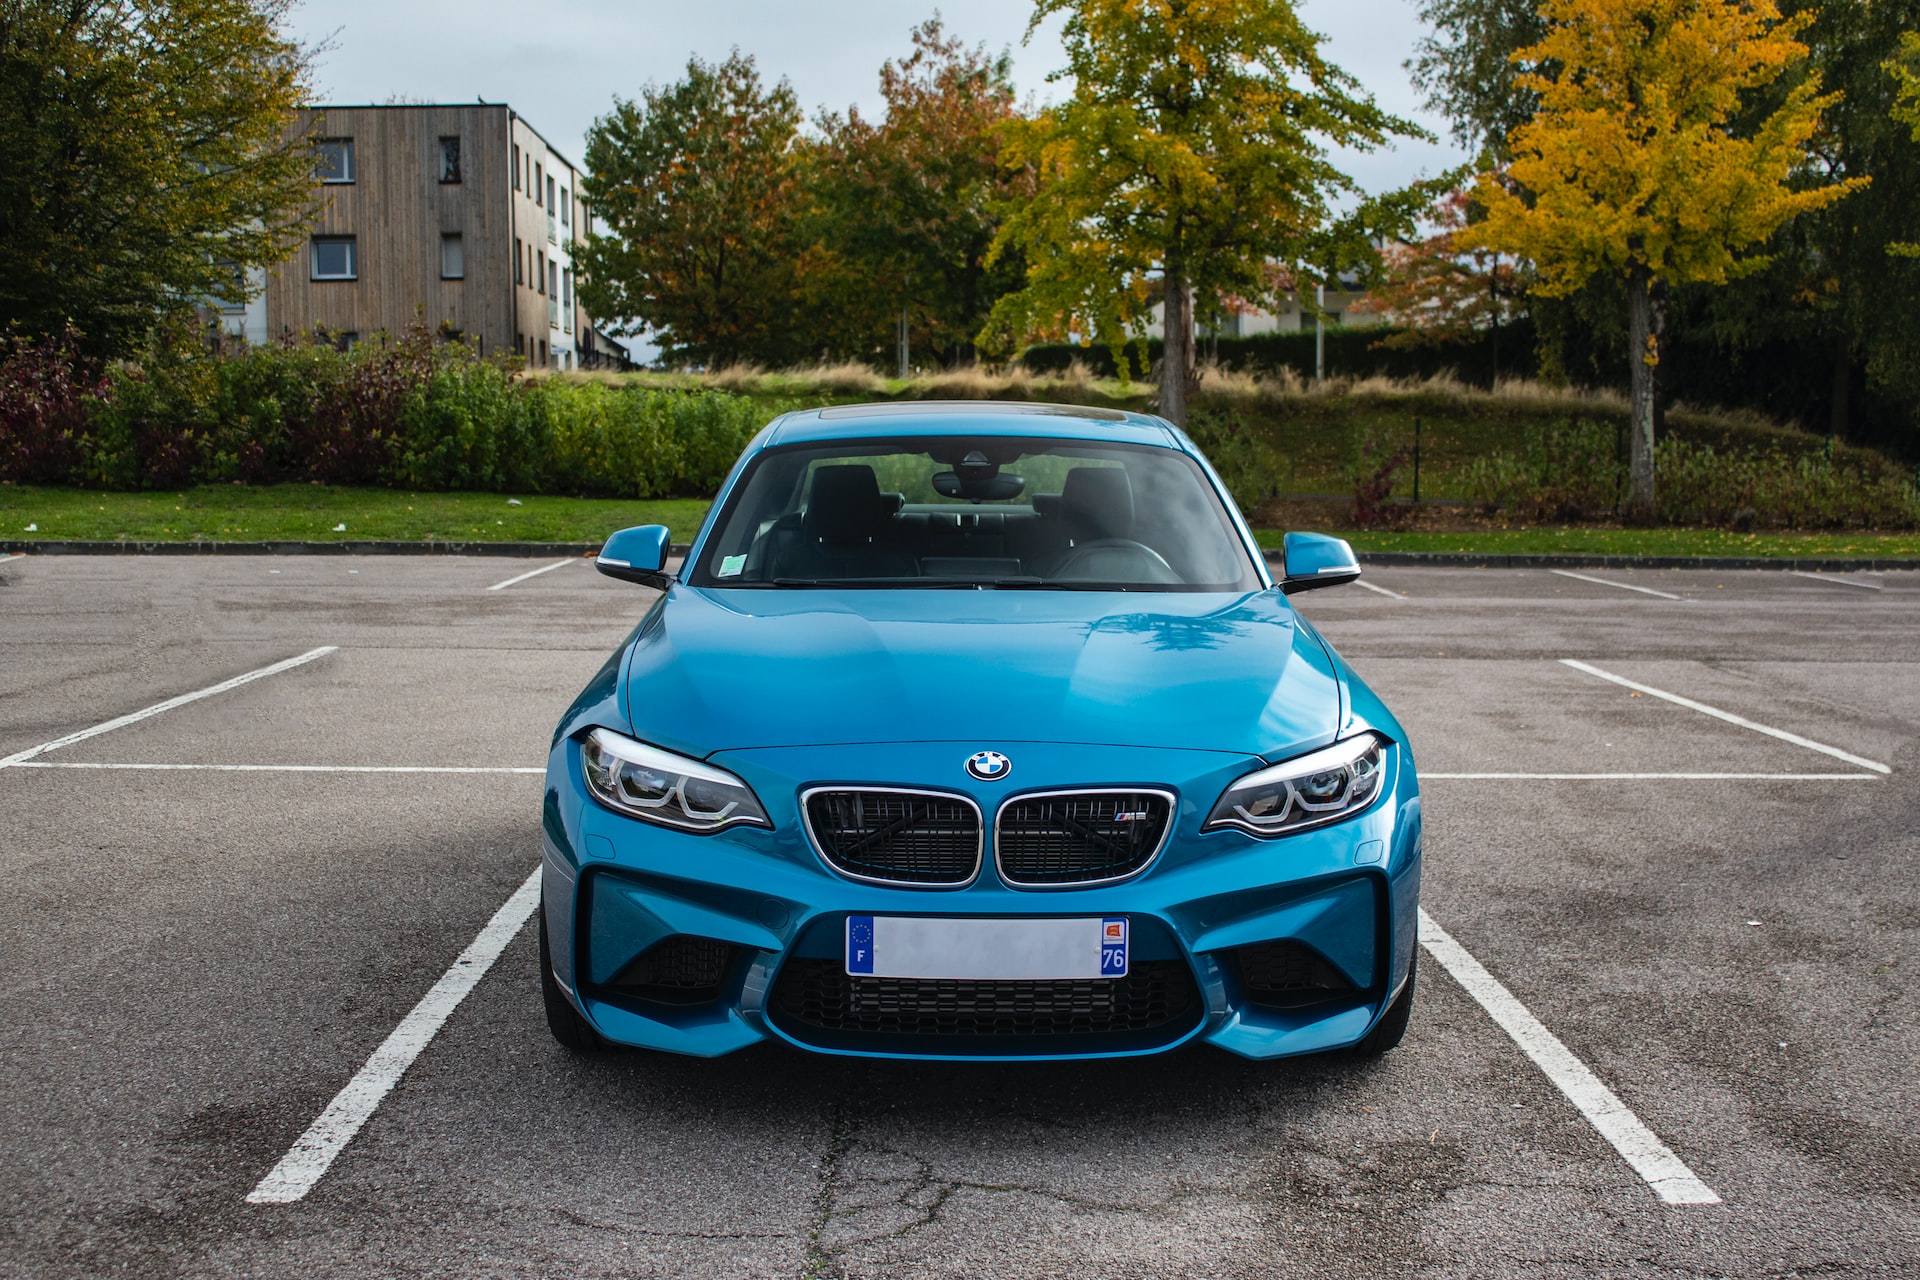 Blue BMW Car Wallpaper